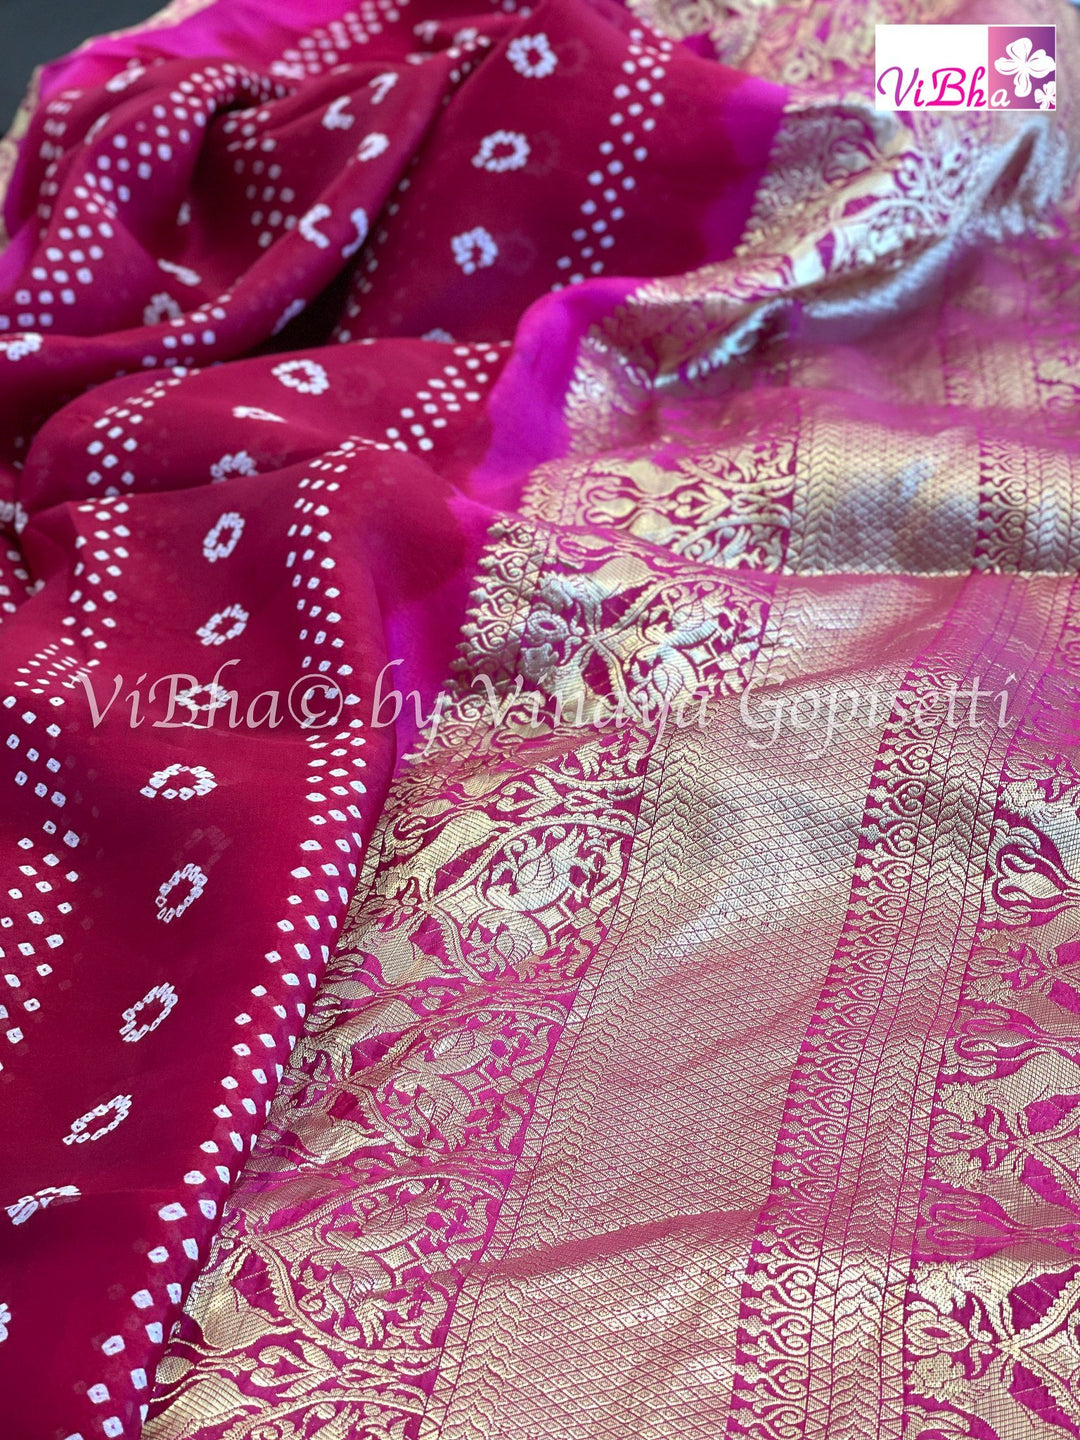 Bandhni Saree - Maroon Red & Pink Kanchi Bandhini Saree